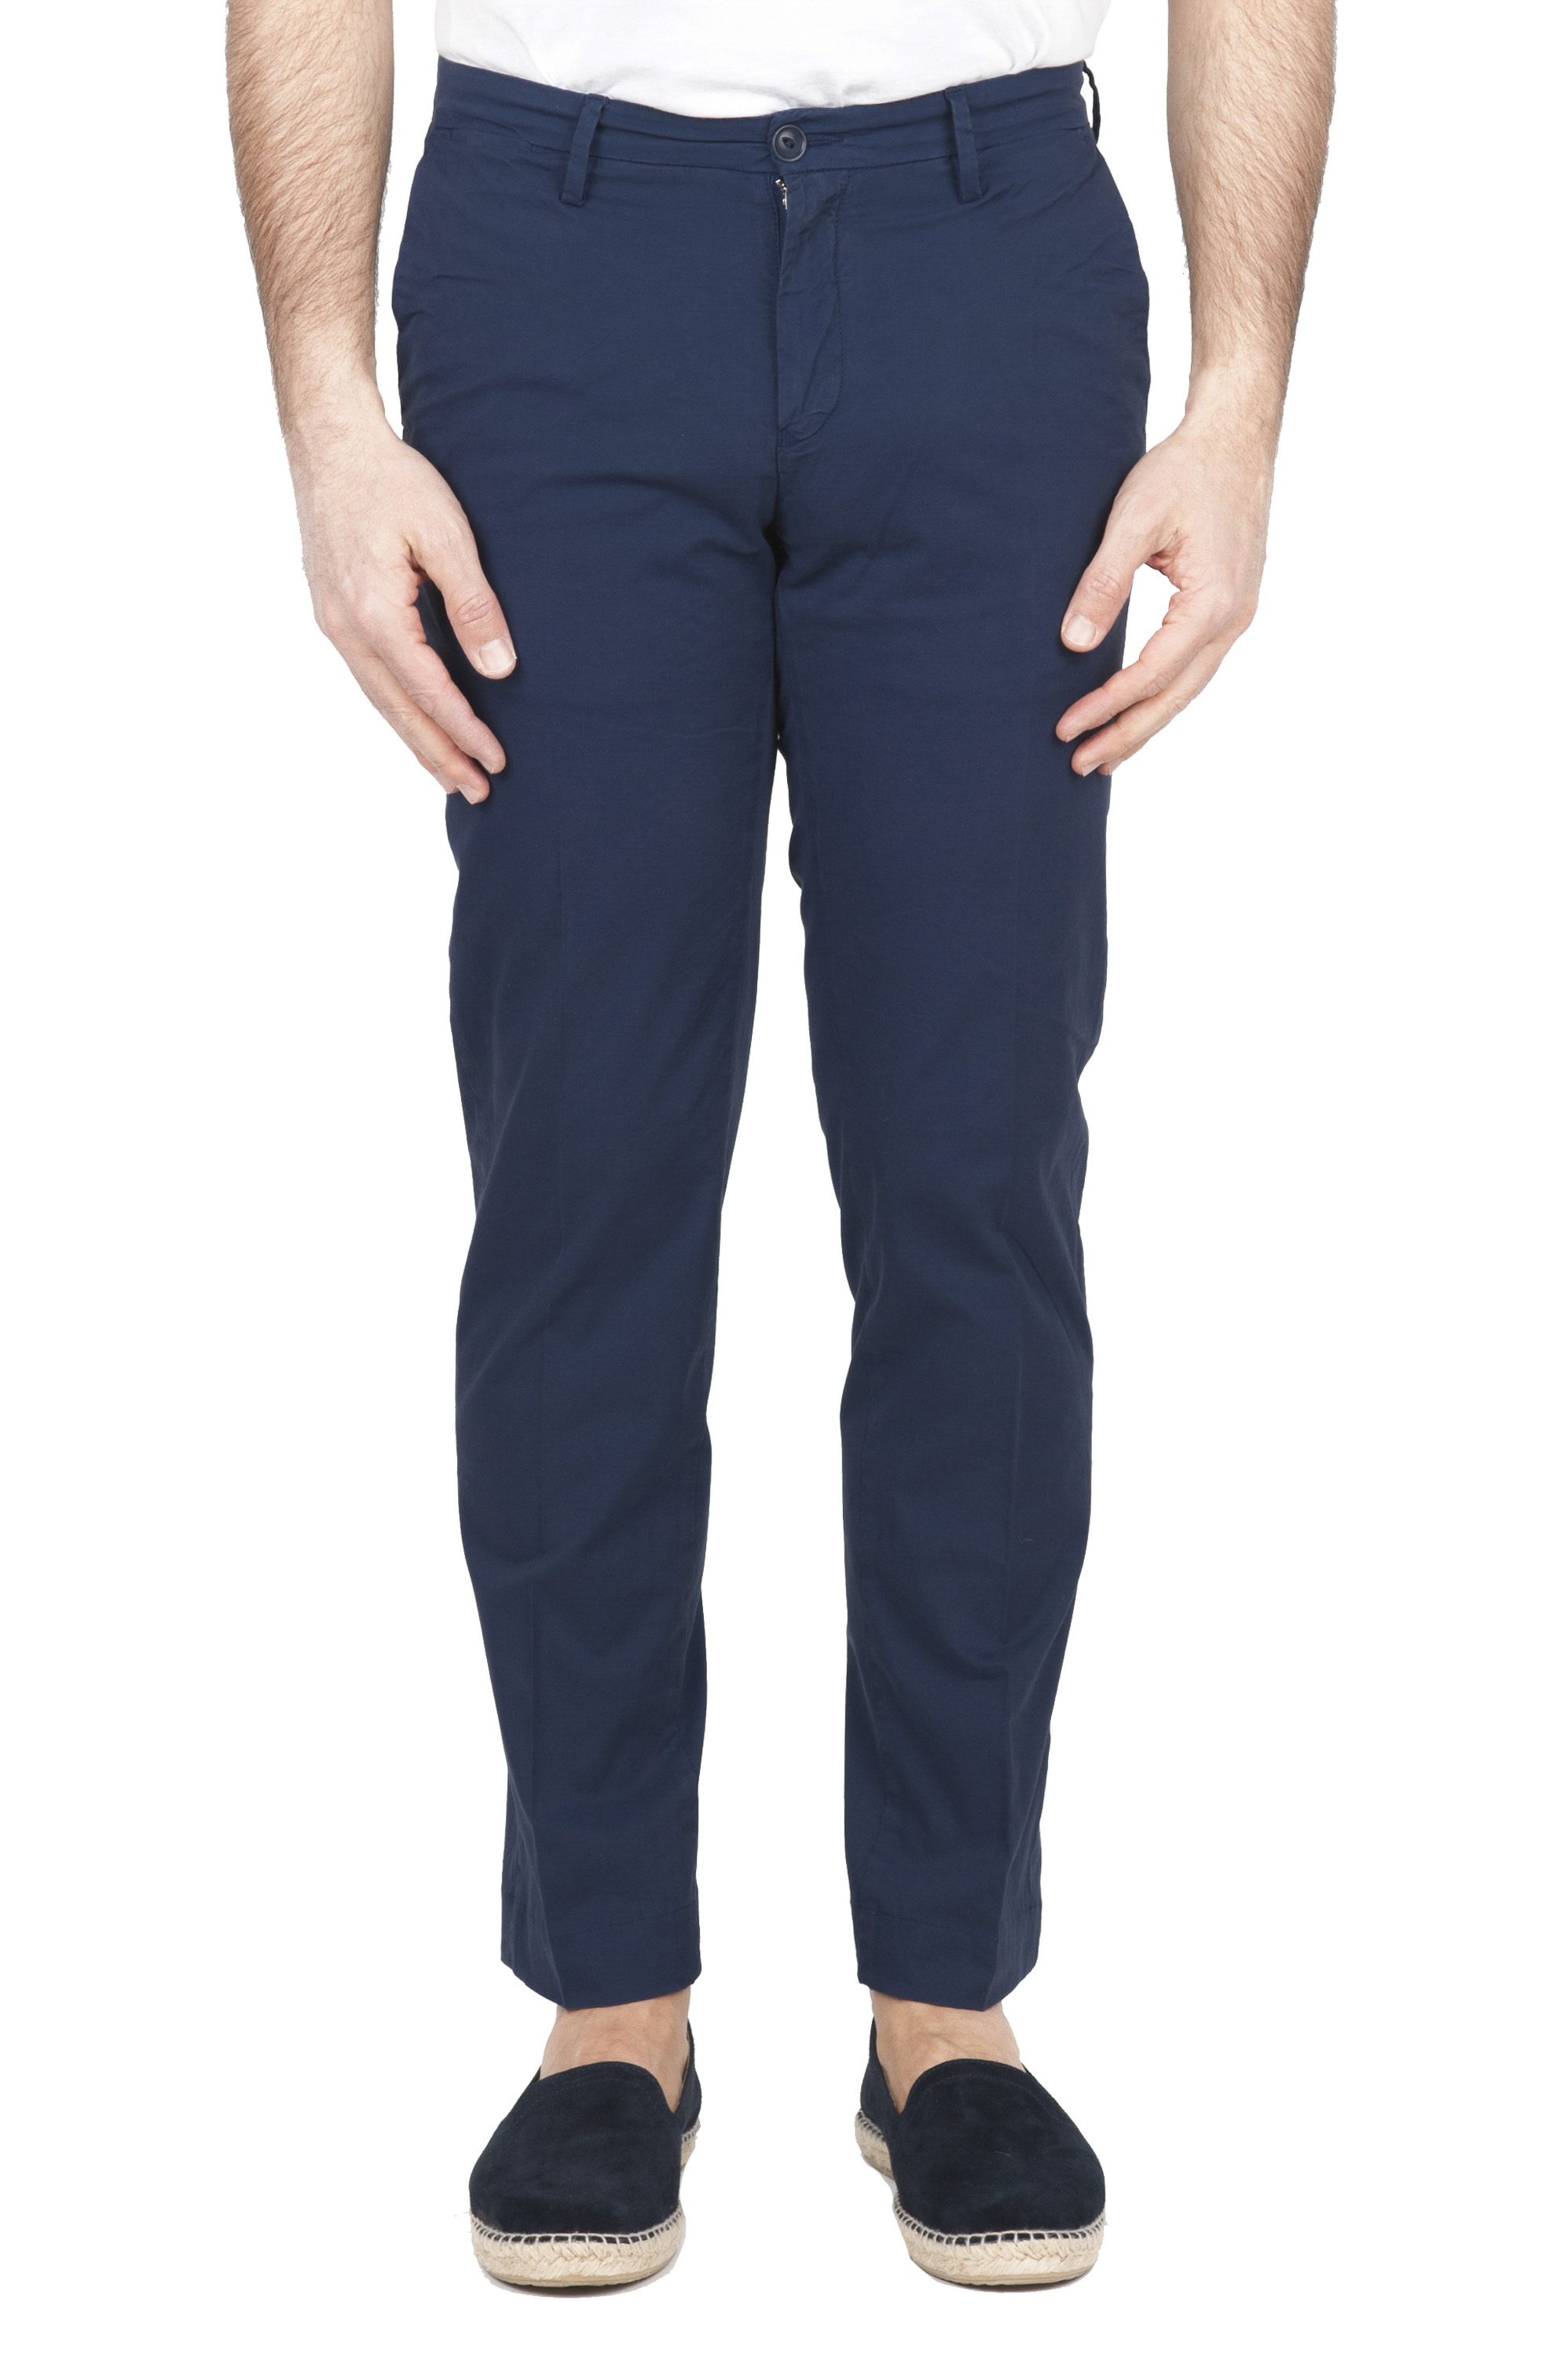 SBU 01684 Pantalon chino classique en coton stretch bleu marine 01